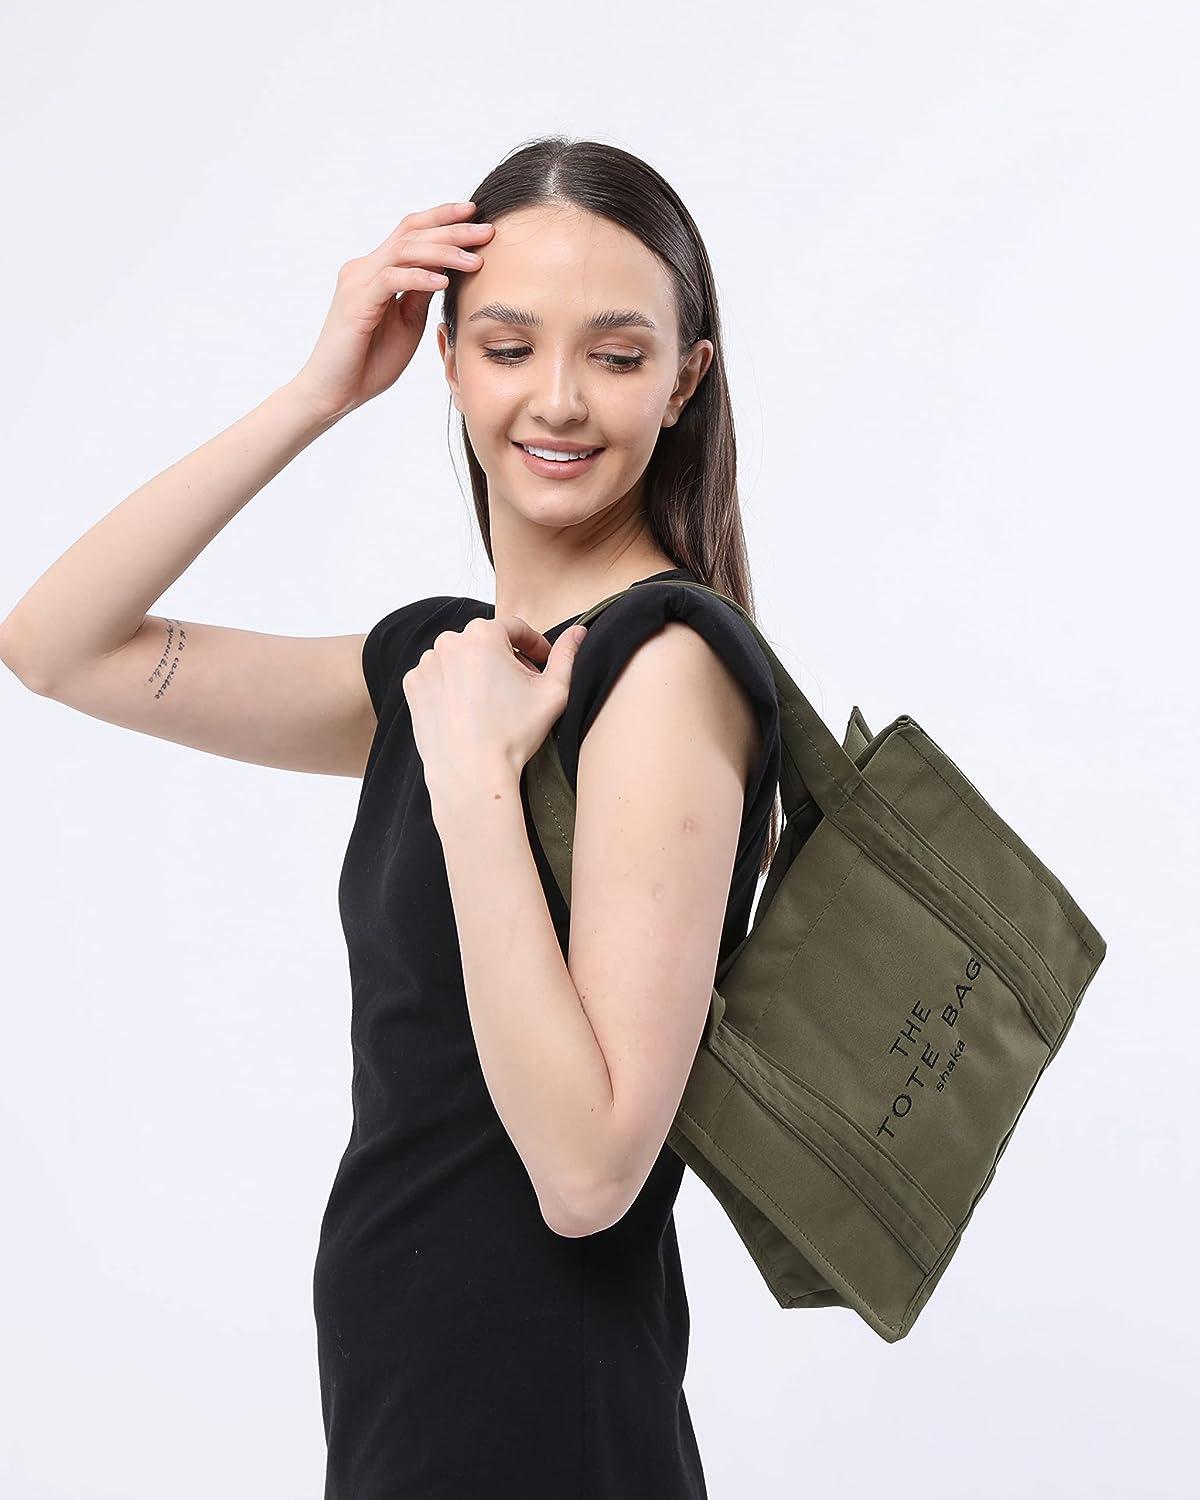 Buy Craftwood Standard Backpack Purse For Women Satchel Handbags Large  Capacity Travel Vintage Pu Leather Shoulder Bag For Office College (Black)  at Amazon.in